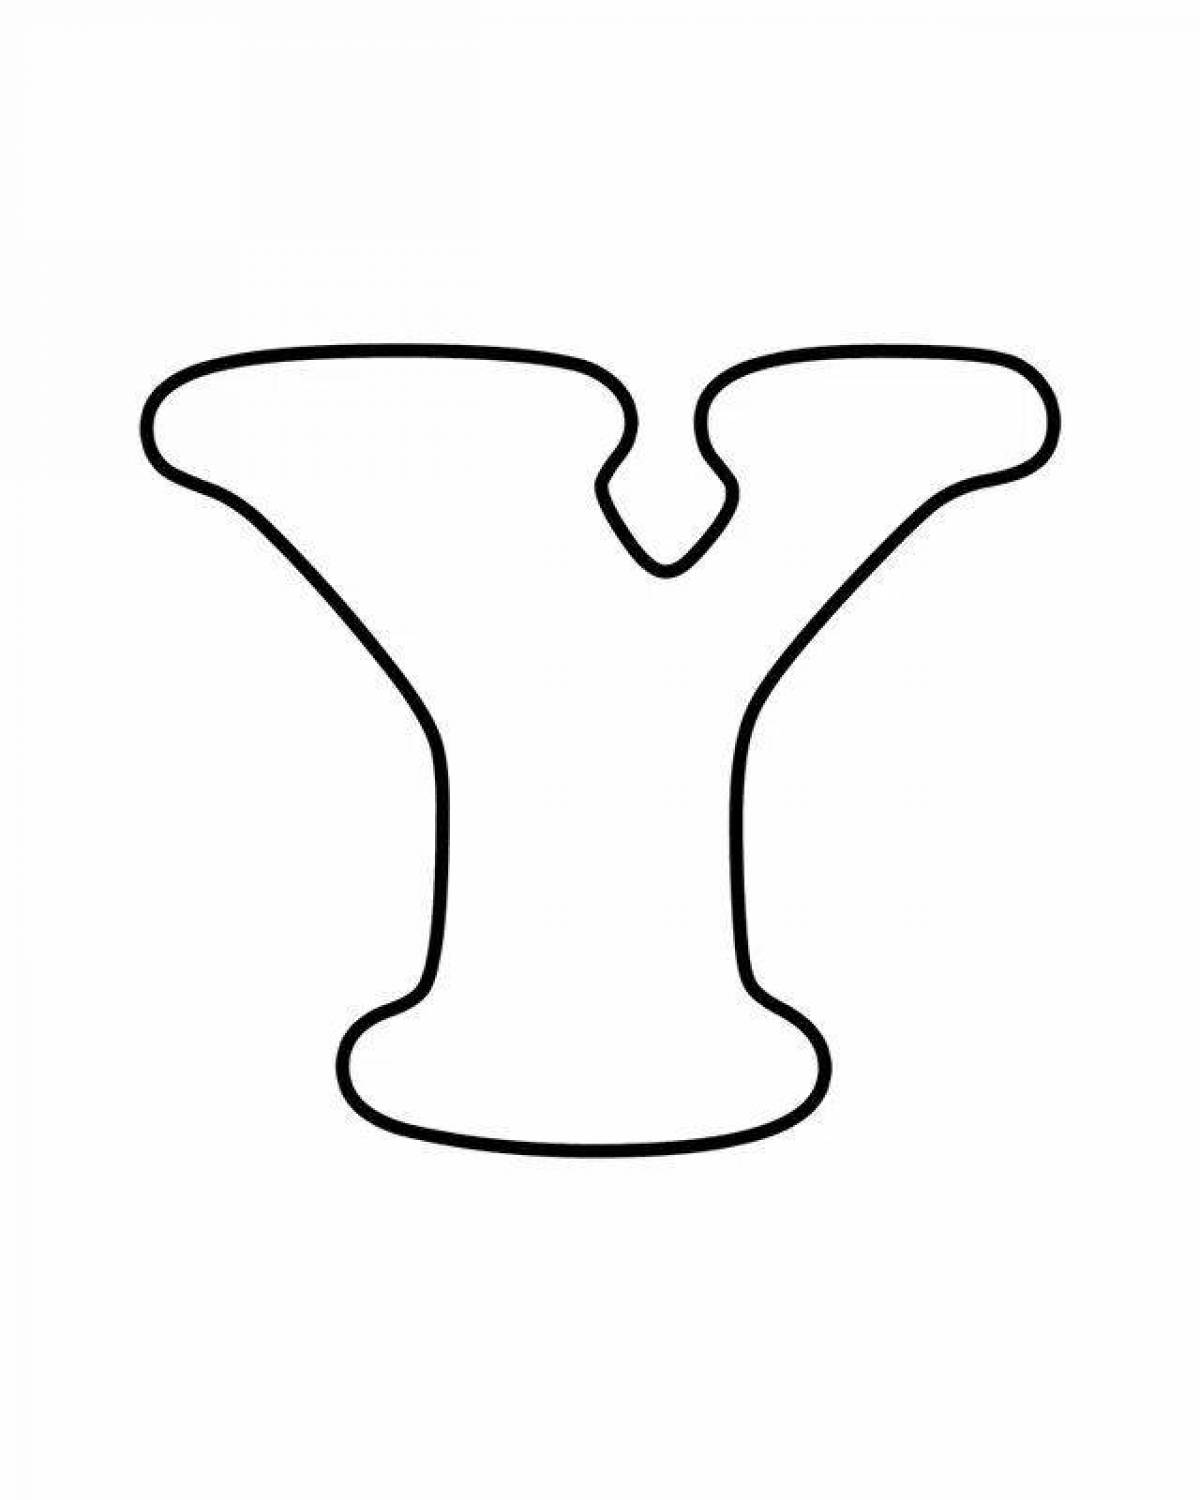 Раскраска захватывающие буквы казахского алфавита